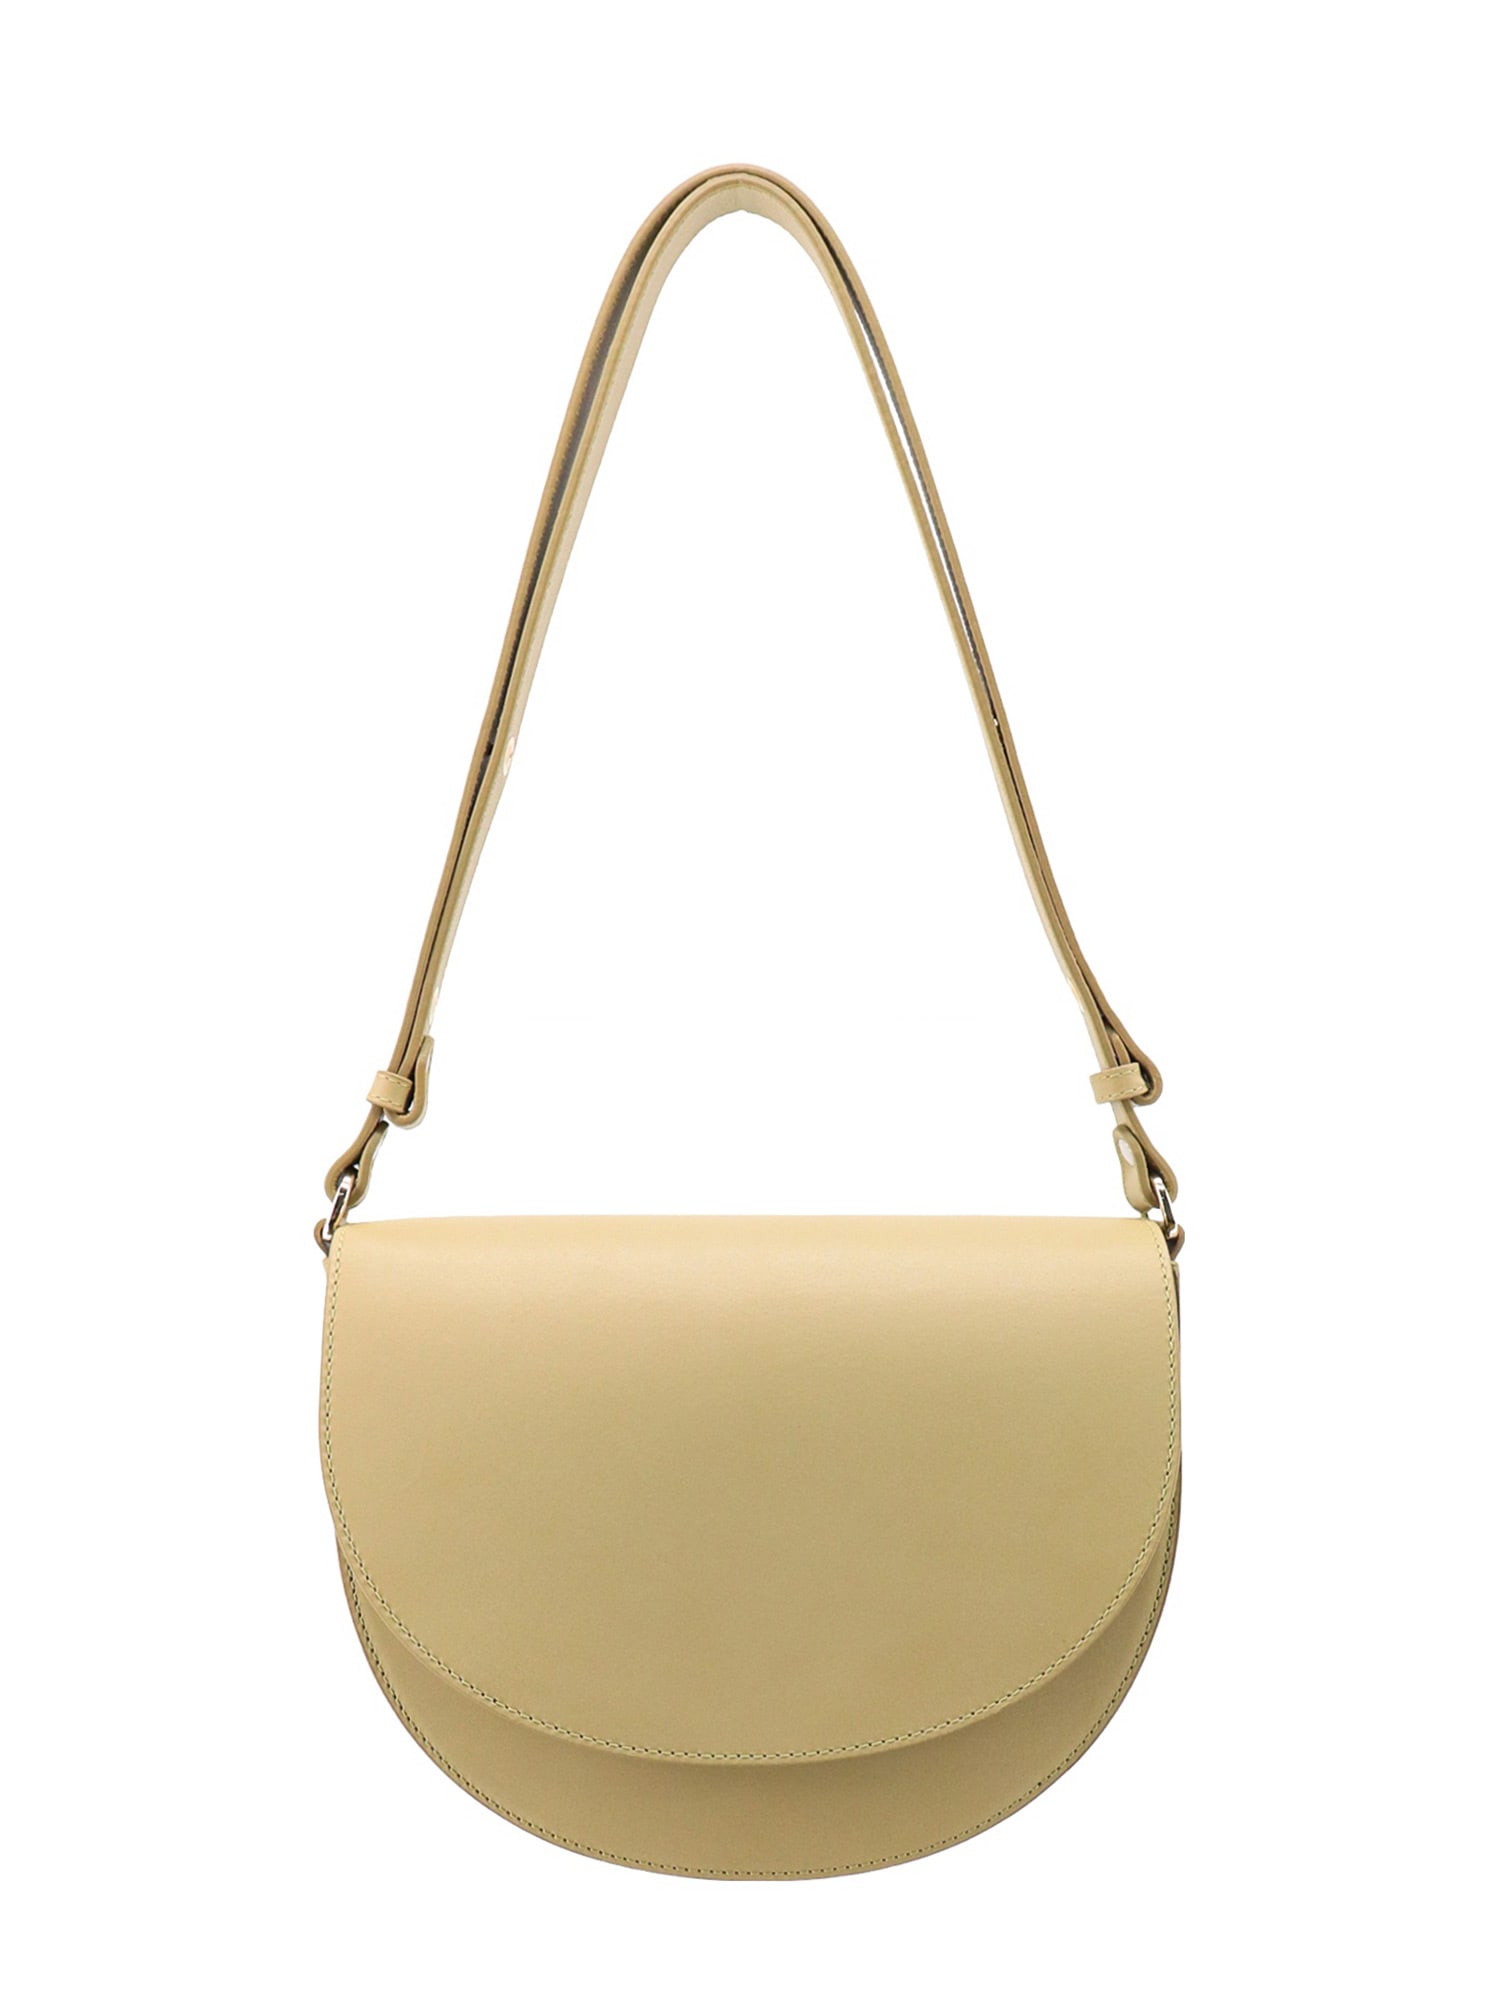 Off to a coffee date! Shop Mielle shoulder bag for P2299: cln.com